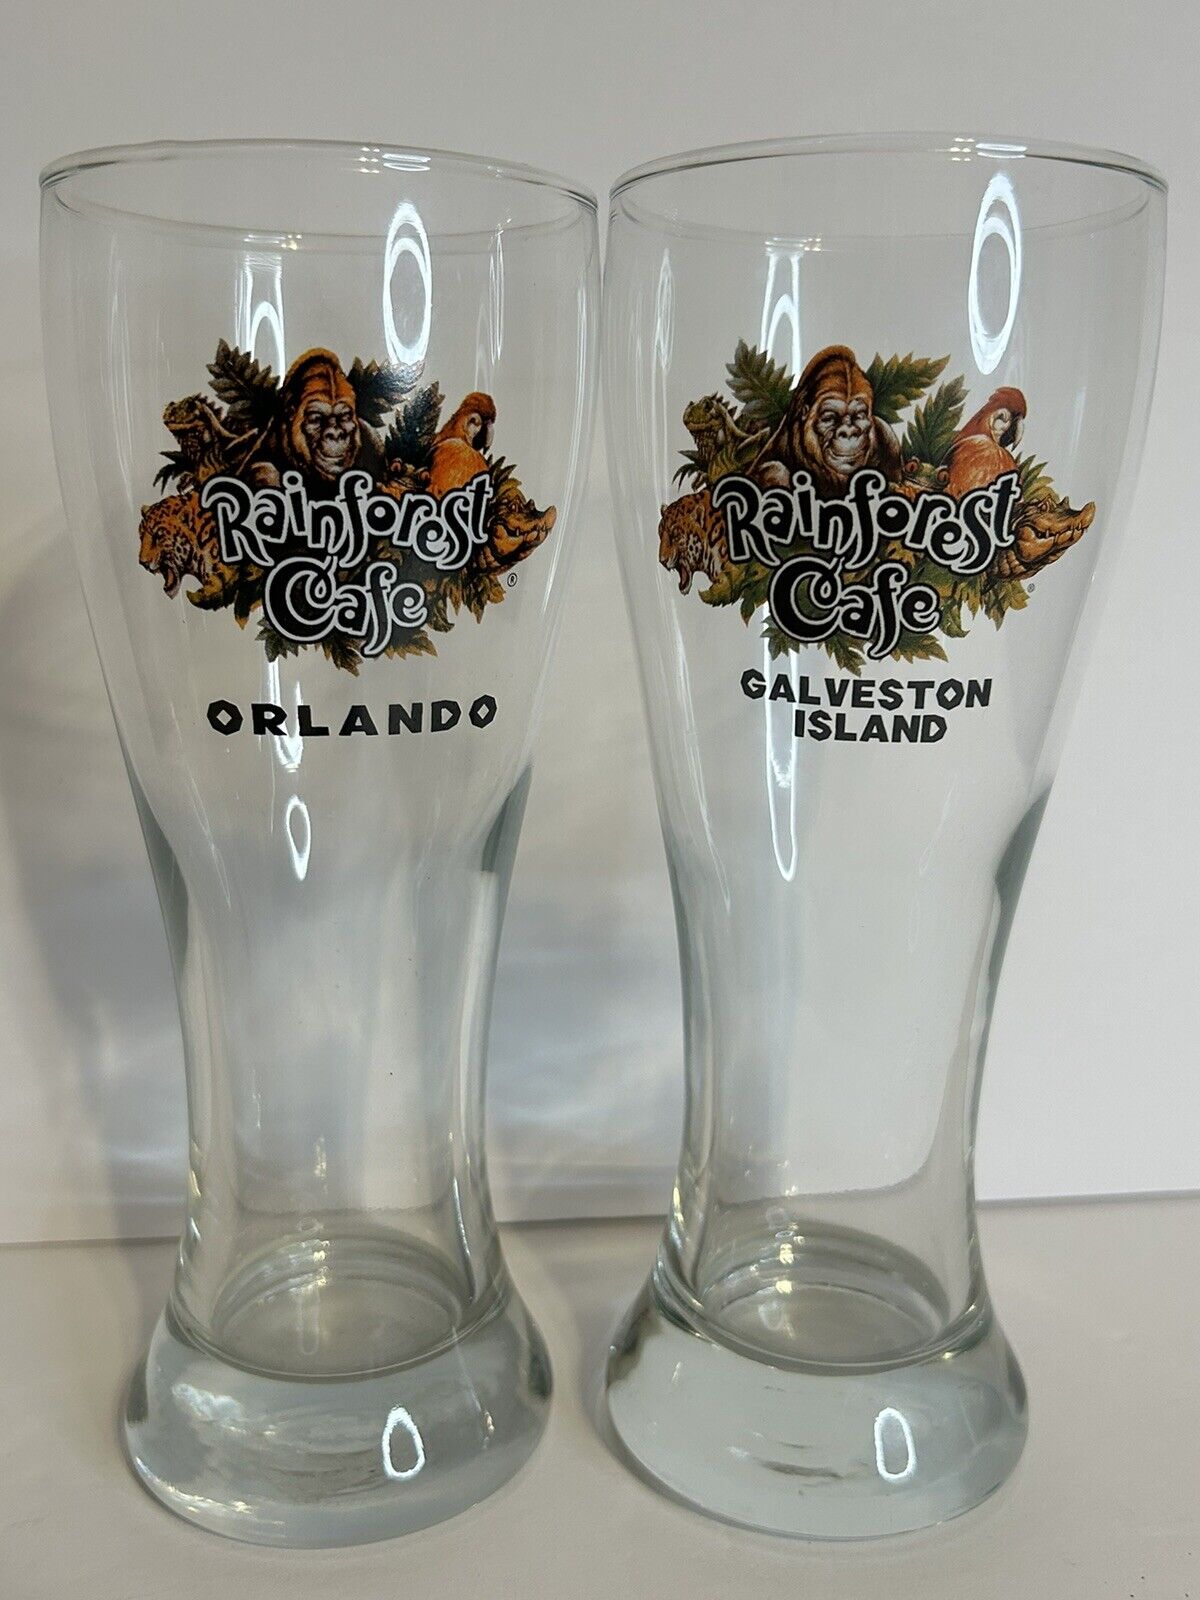 (2) Rainforest Cafe Tall Beer Glasses - Orlando and Galveston Island